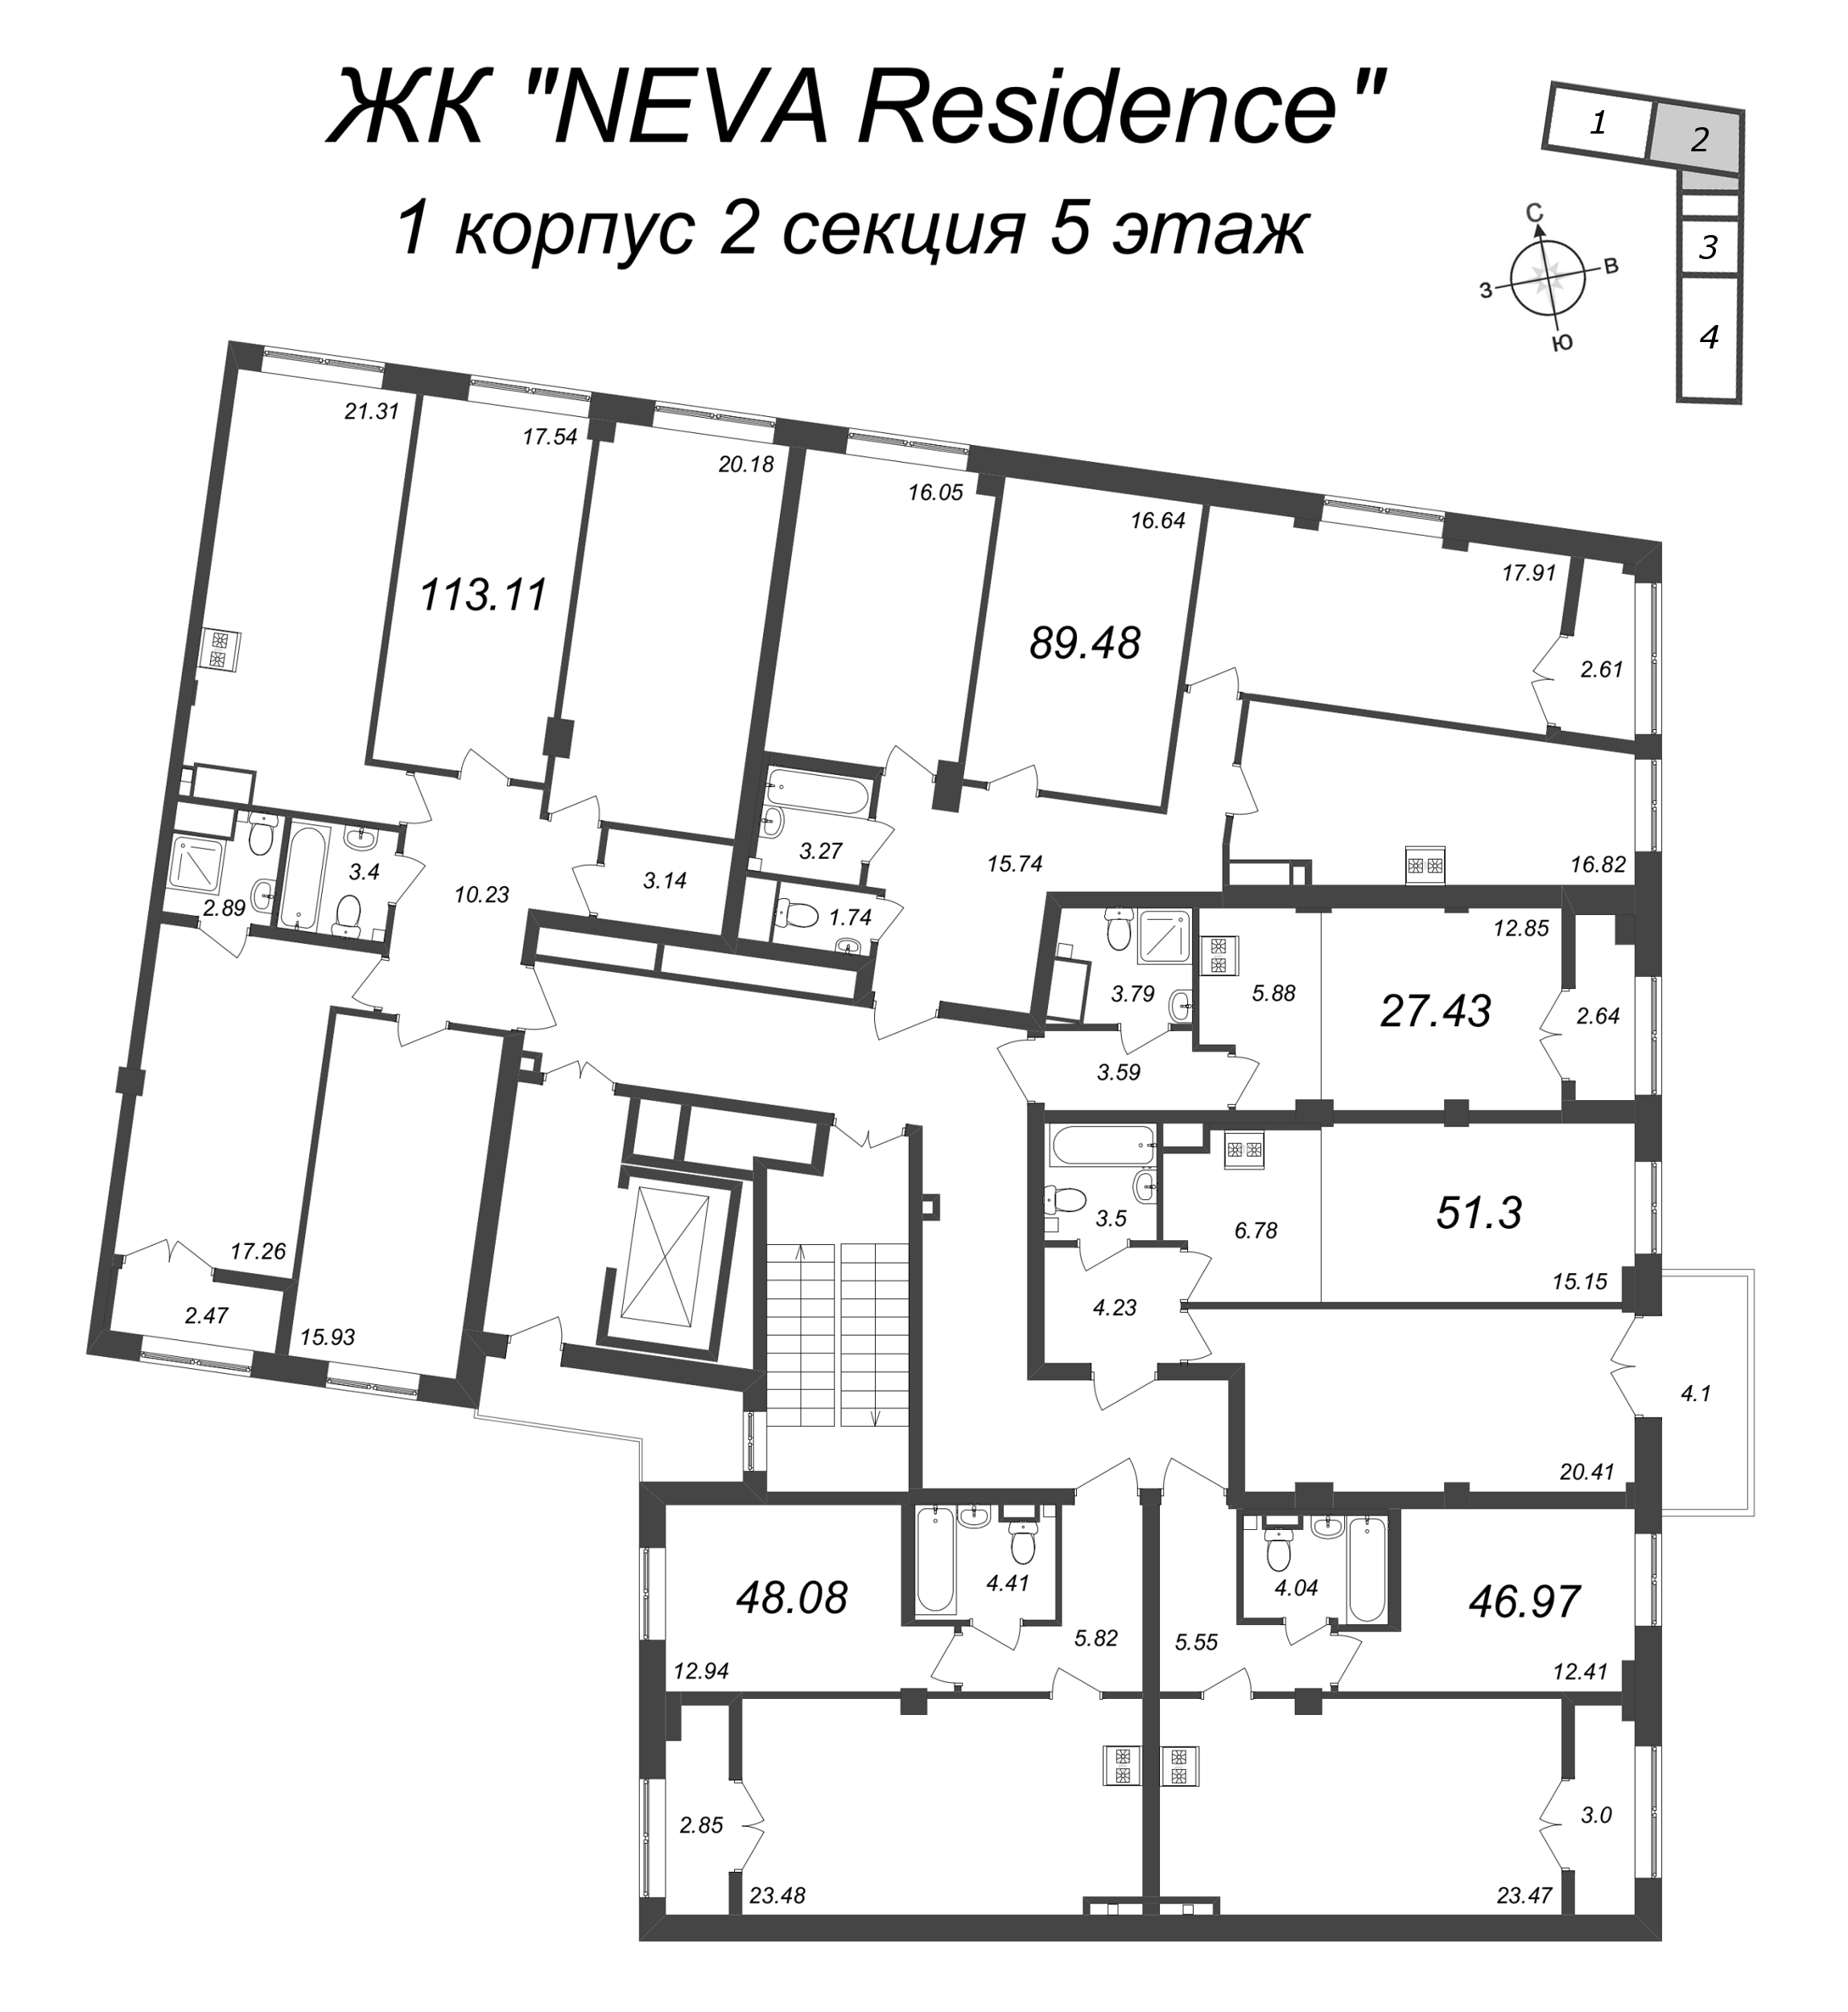 2-комнатная (Евро) квартира, 51.3 м² - планировка этажа